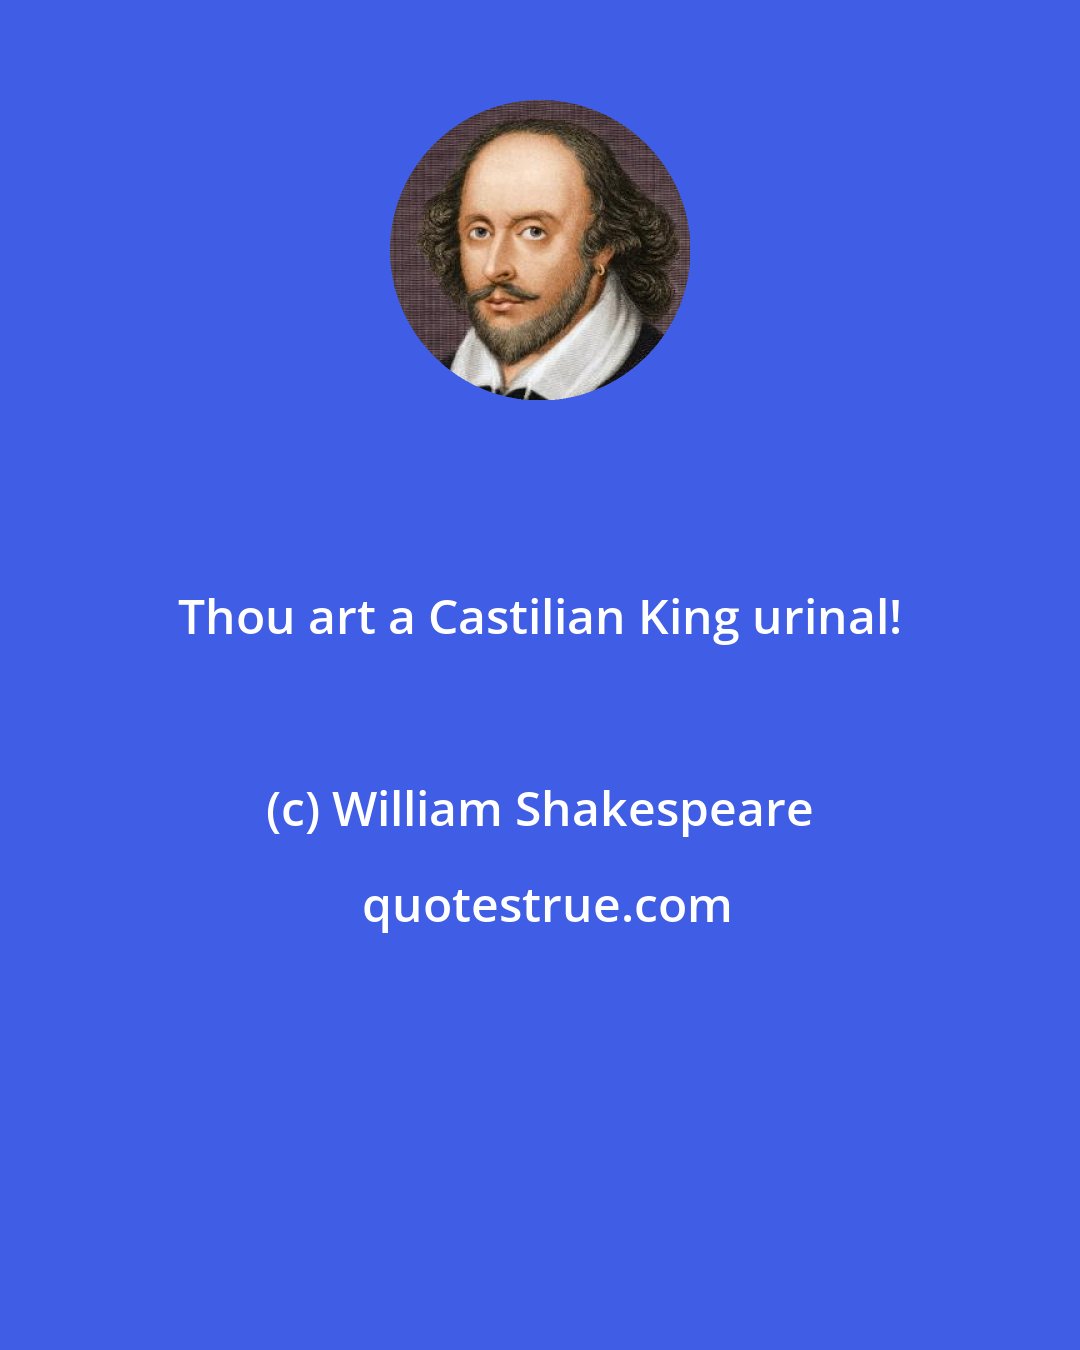 William Shakespeare: Thou art a Castilian King urinal!